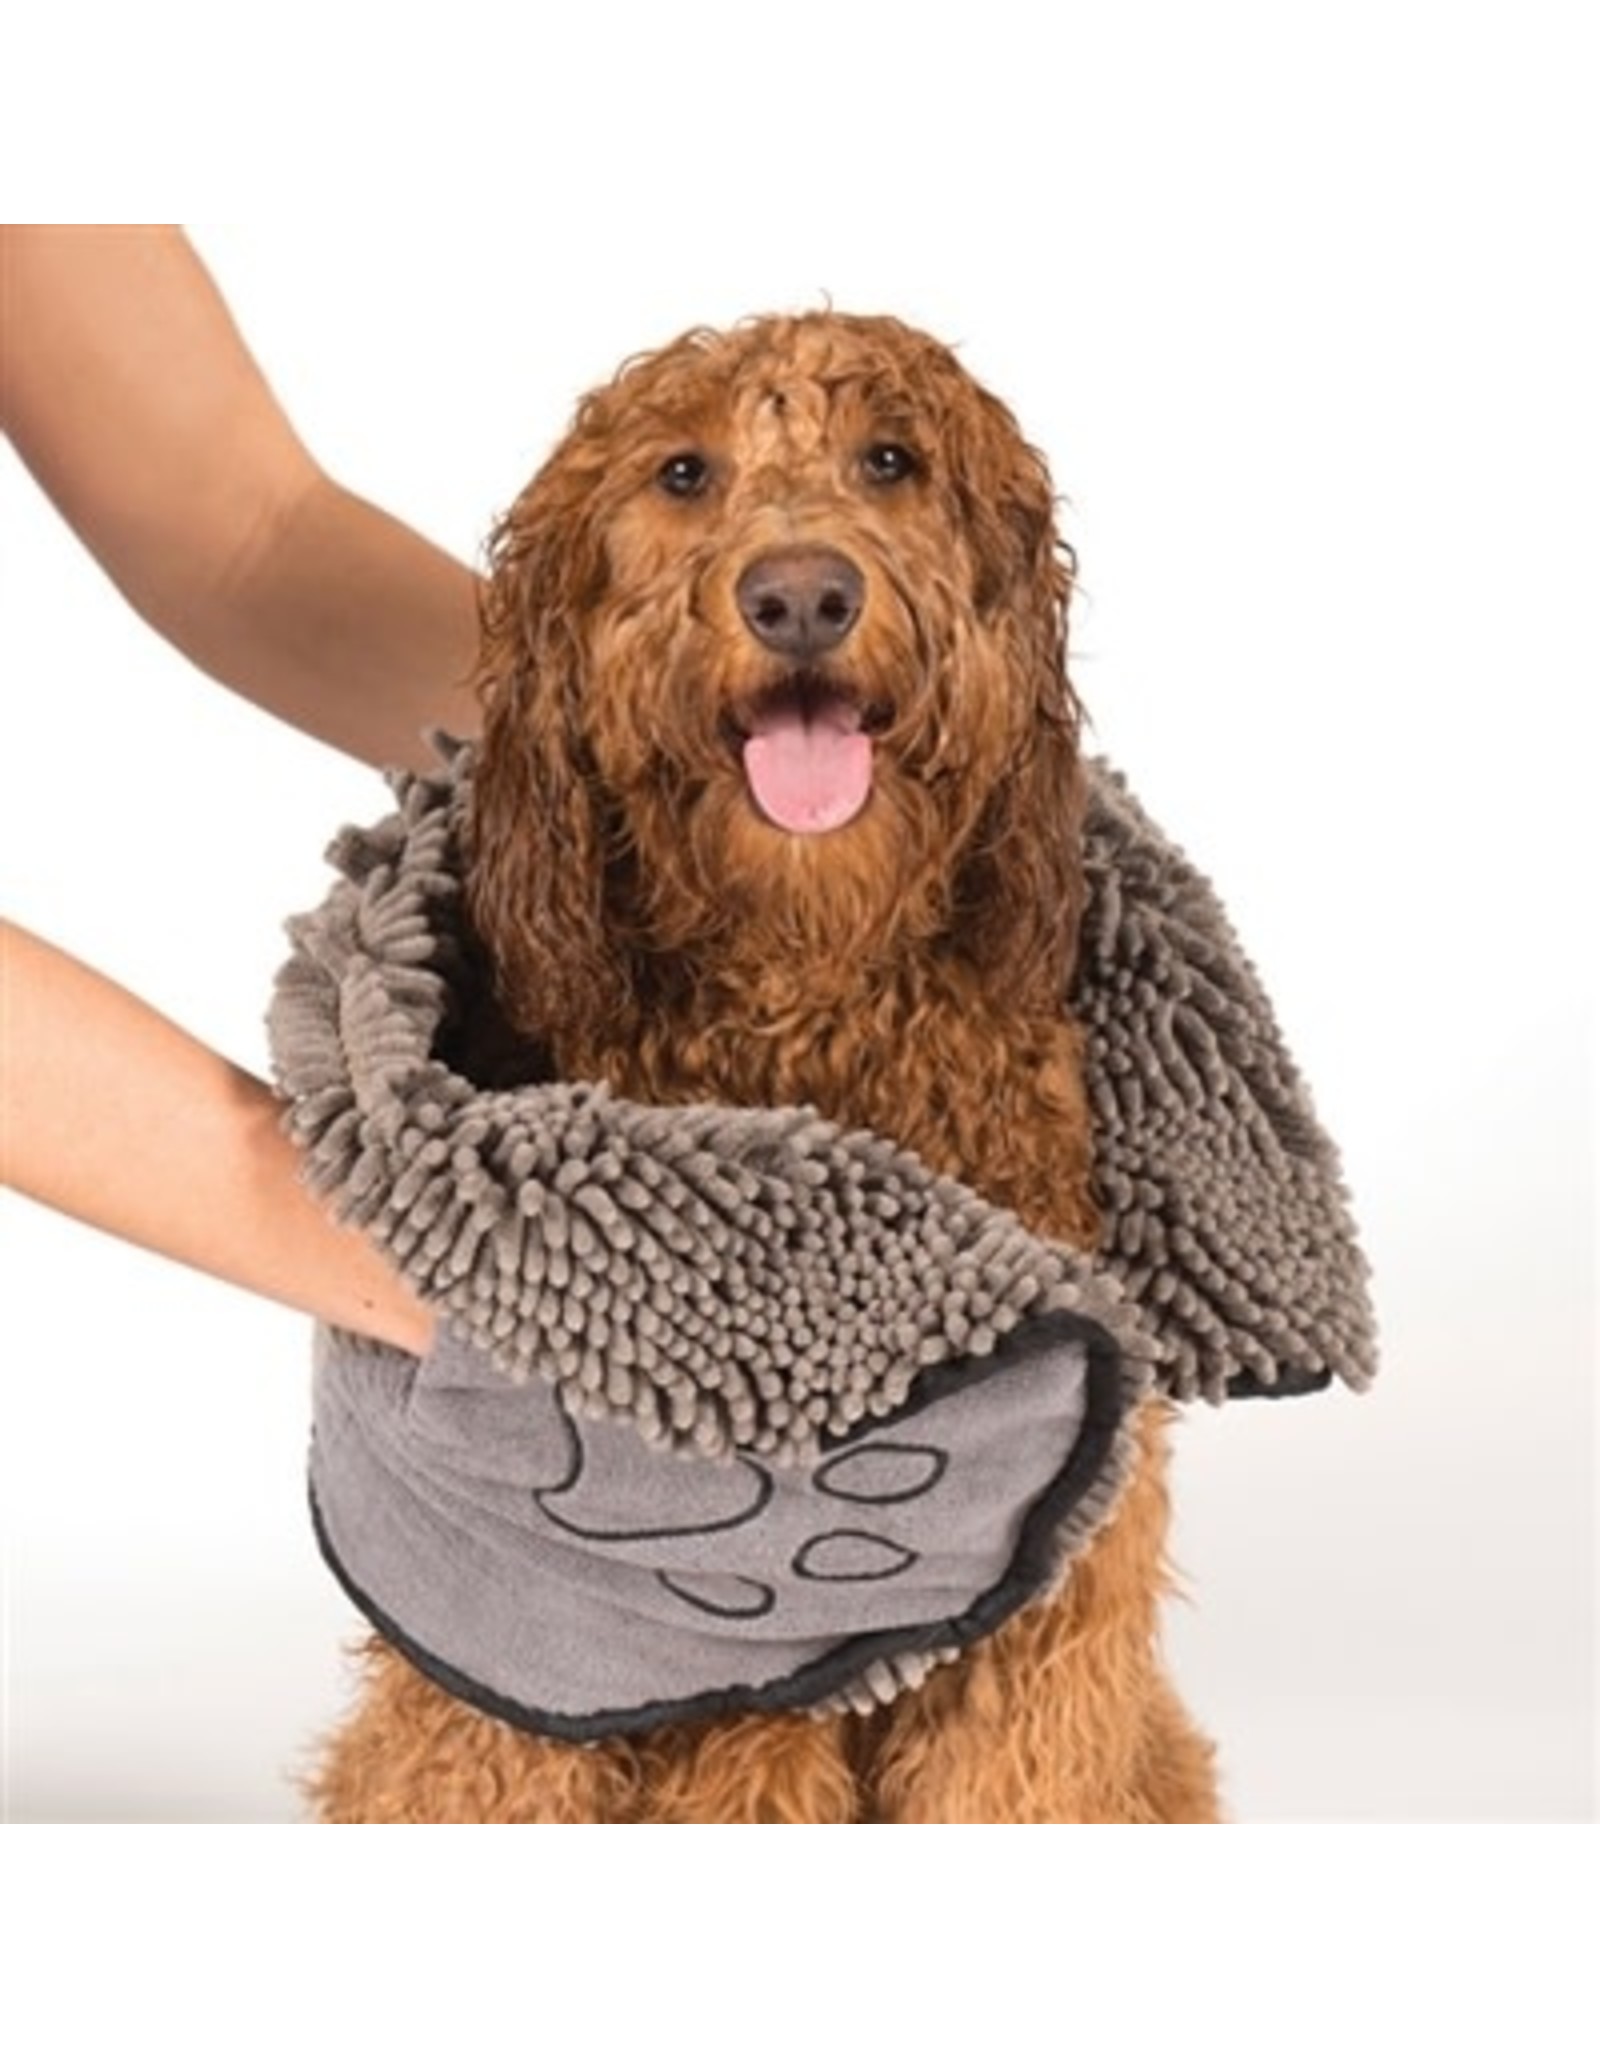 Dog Gone Smart Pet Products Dirty Dog Shammy Towel: Grey, os